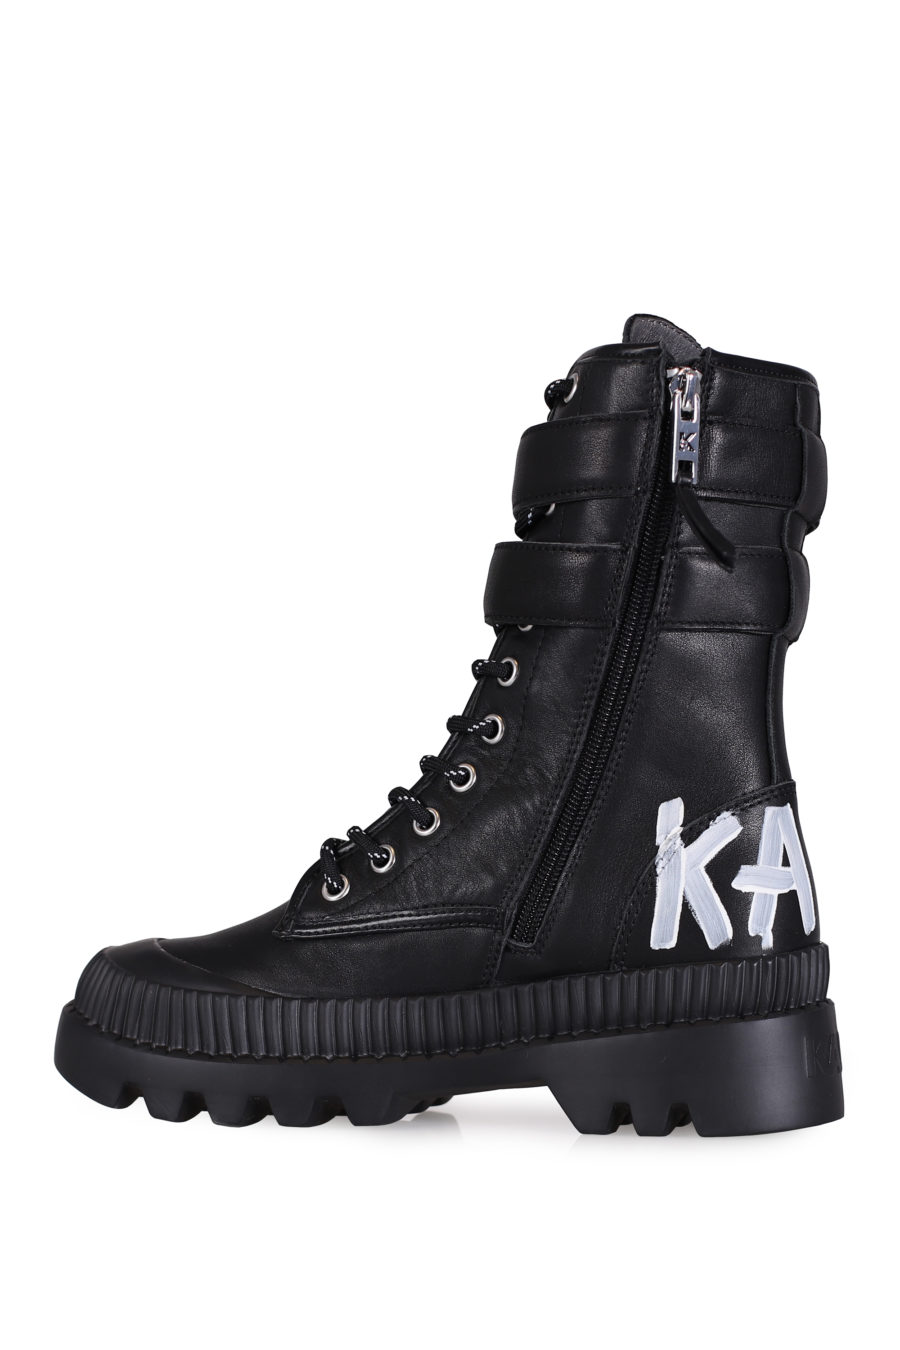 Trekka" boots in black with logo - IMG 0737